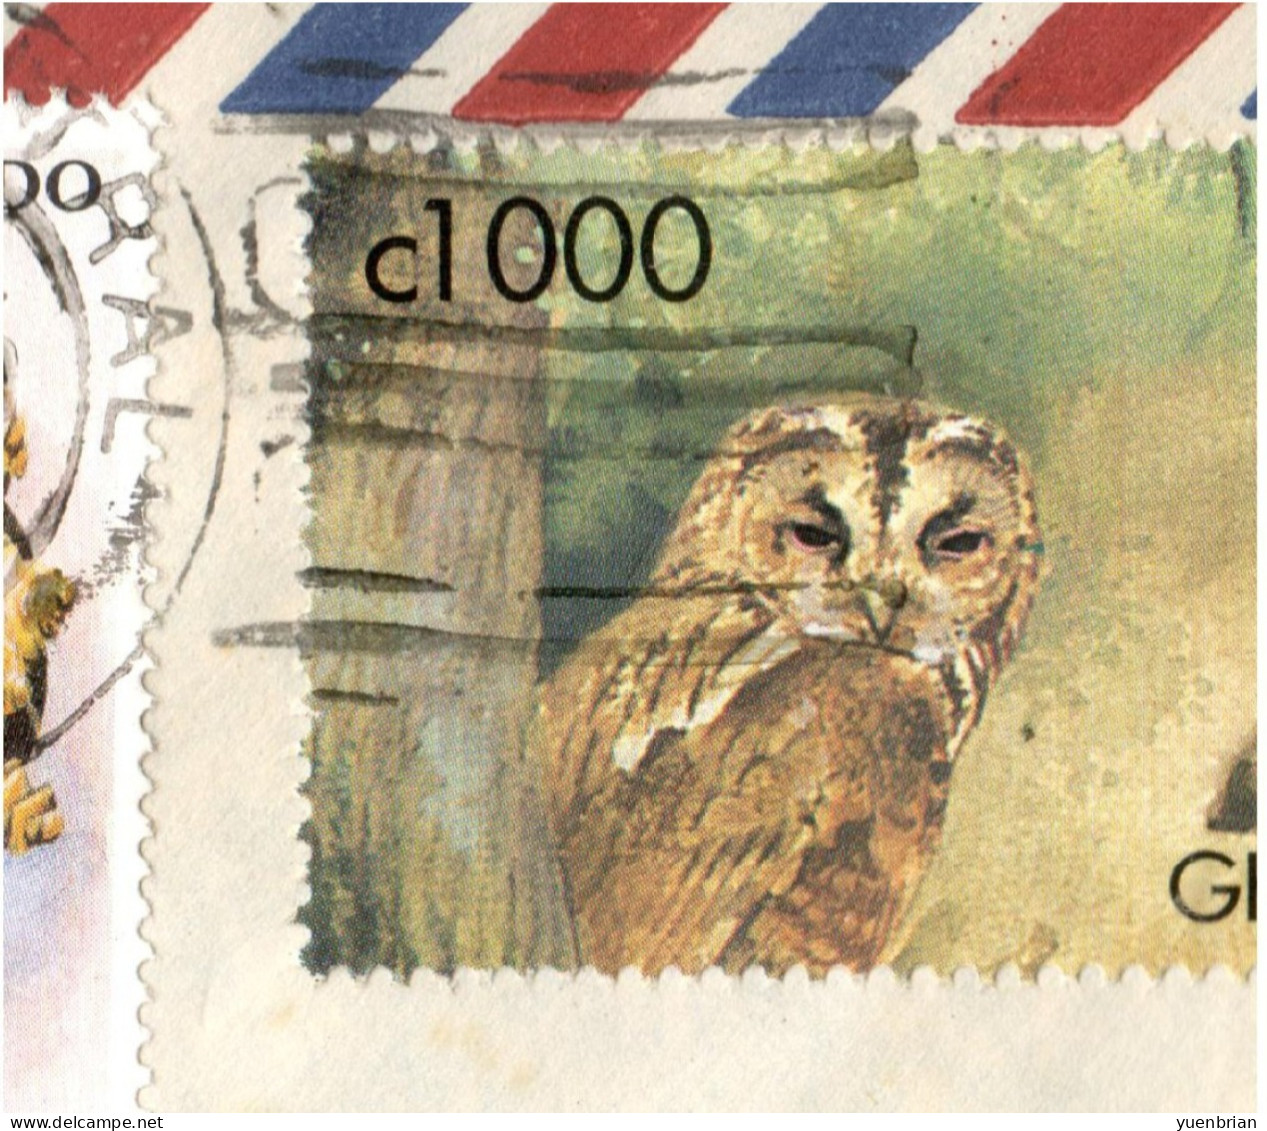 Ghana, Bird, Birds, Owl, Circulated Cover To Germany - Eulenvögel